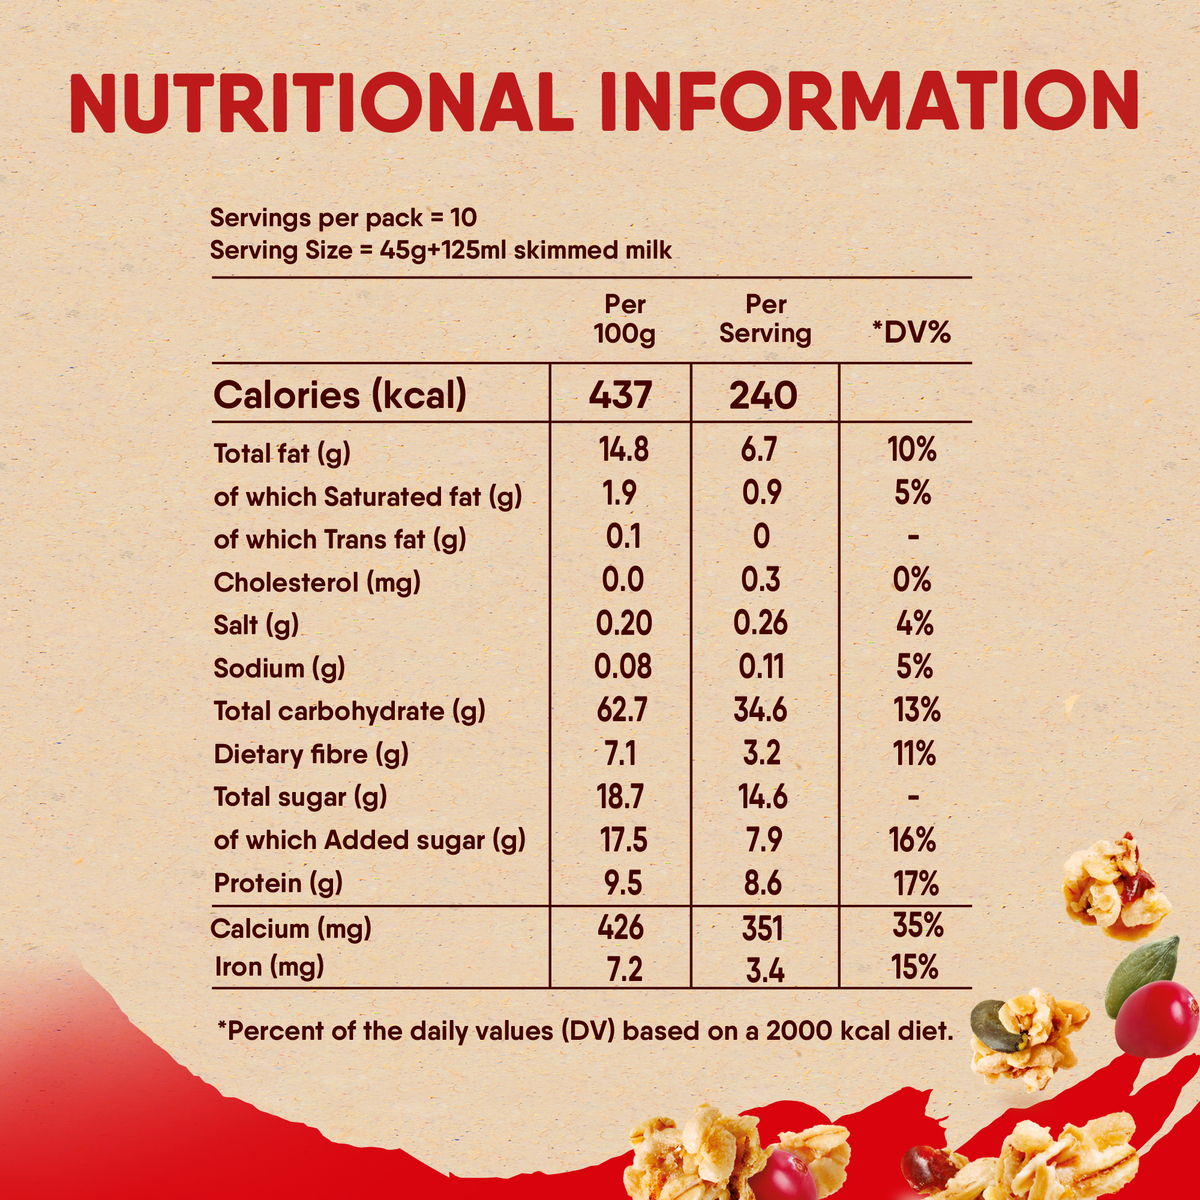 Nestle Fitness Granola With Cranberries & Pumkin Seeds Breakfast Cereal 450 g